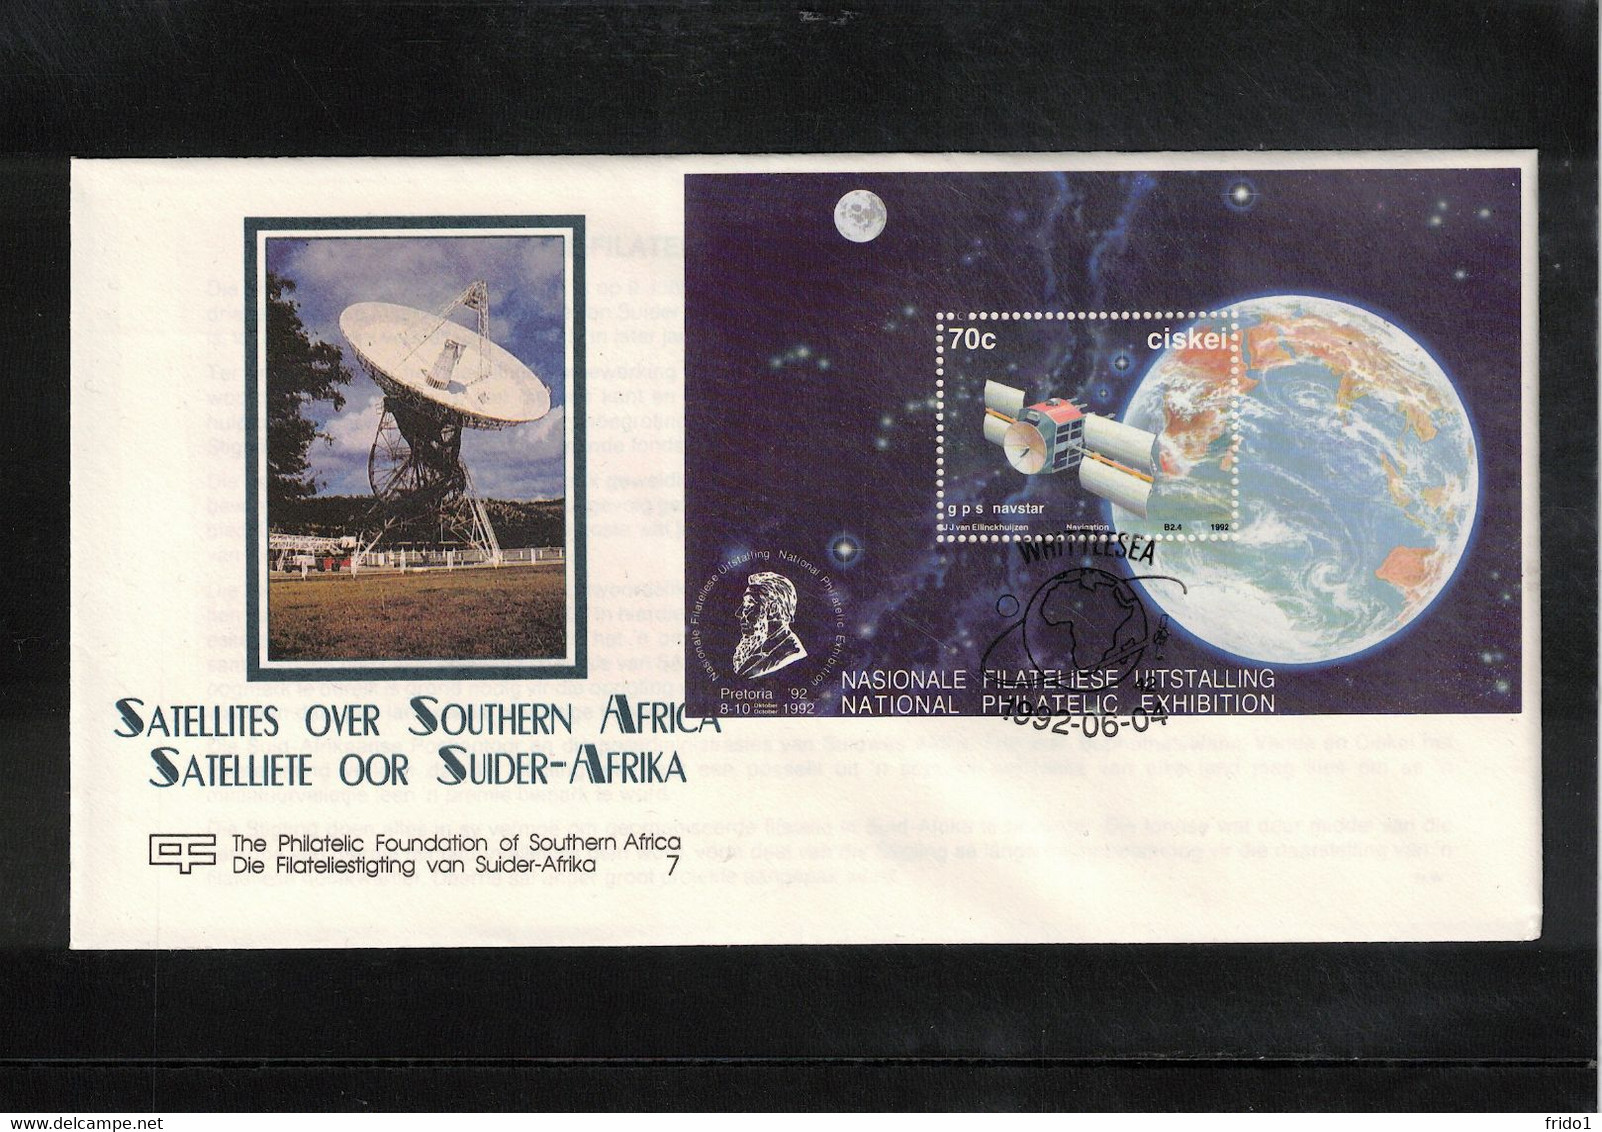 Ciskei 1992 Space / Raumfahrt Satellites Over Southern Africa Block FDC - Afrika